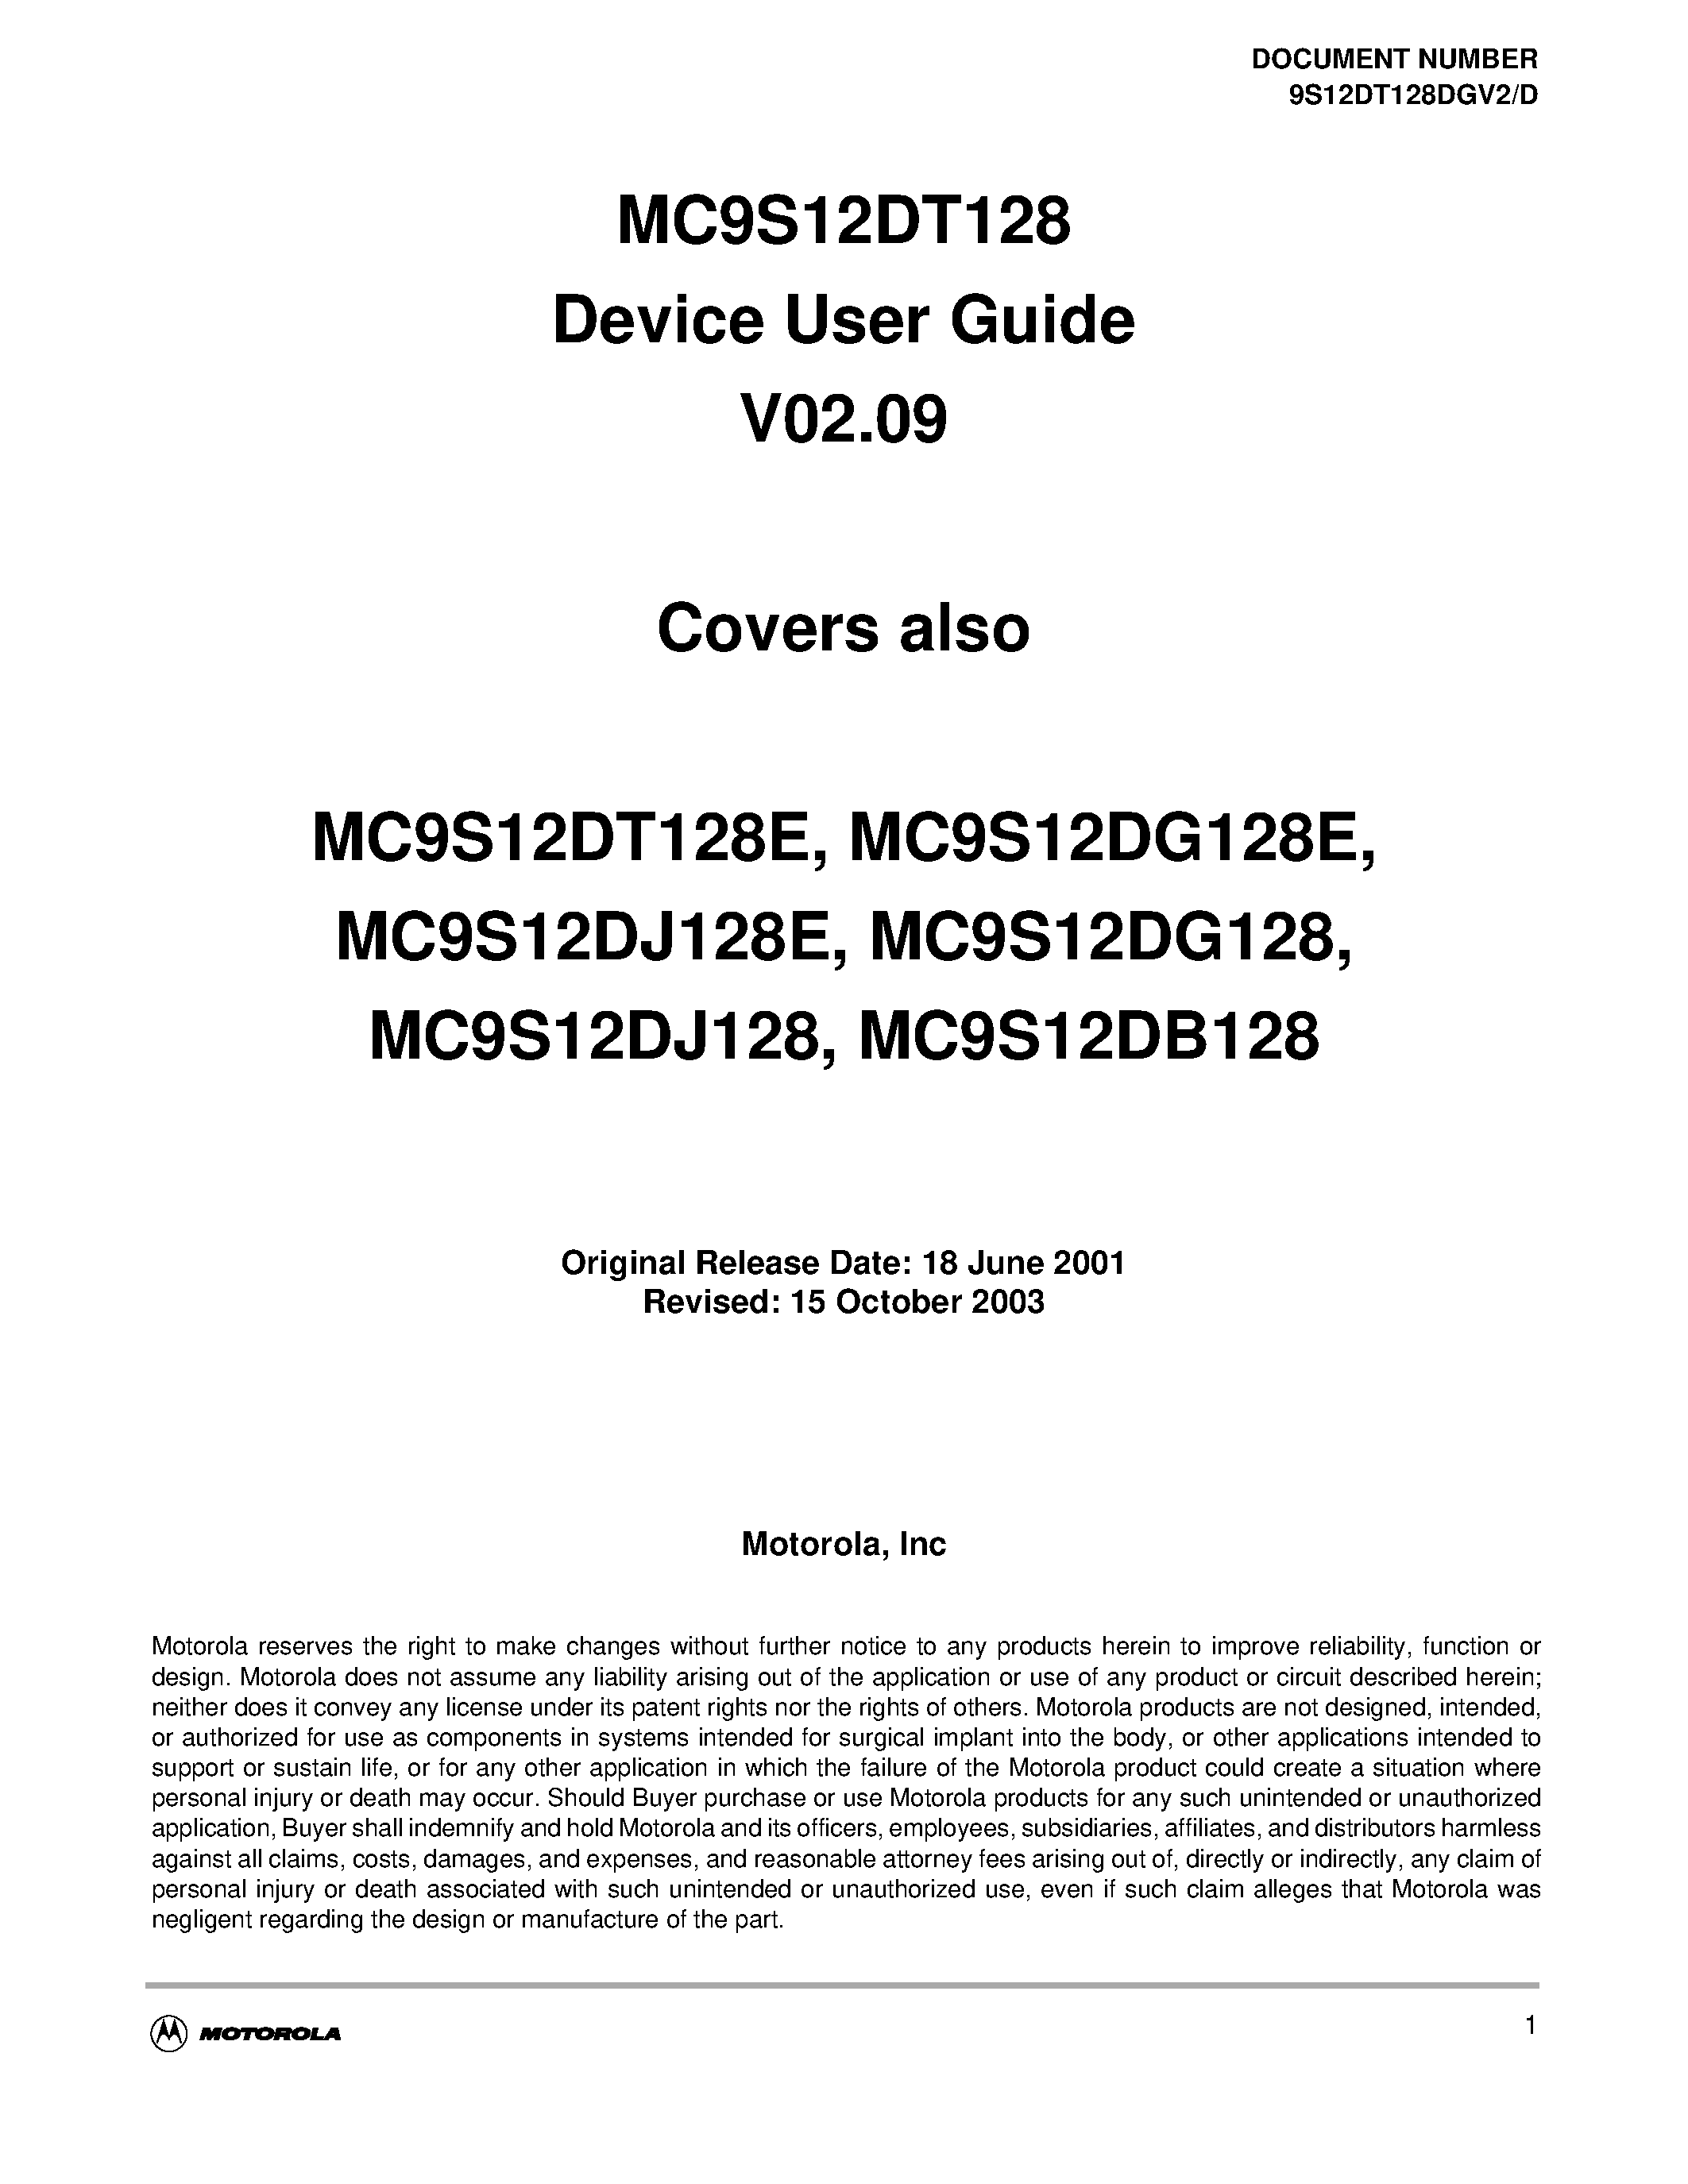 Даташит SC515847 - MC9S12DT128 Device User Guide V02.09 страница 1